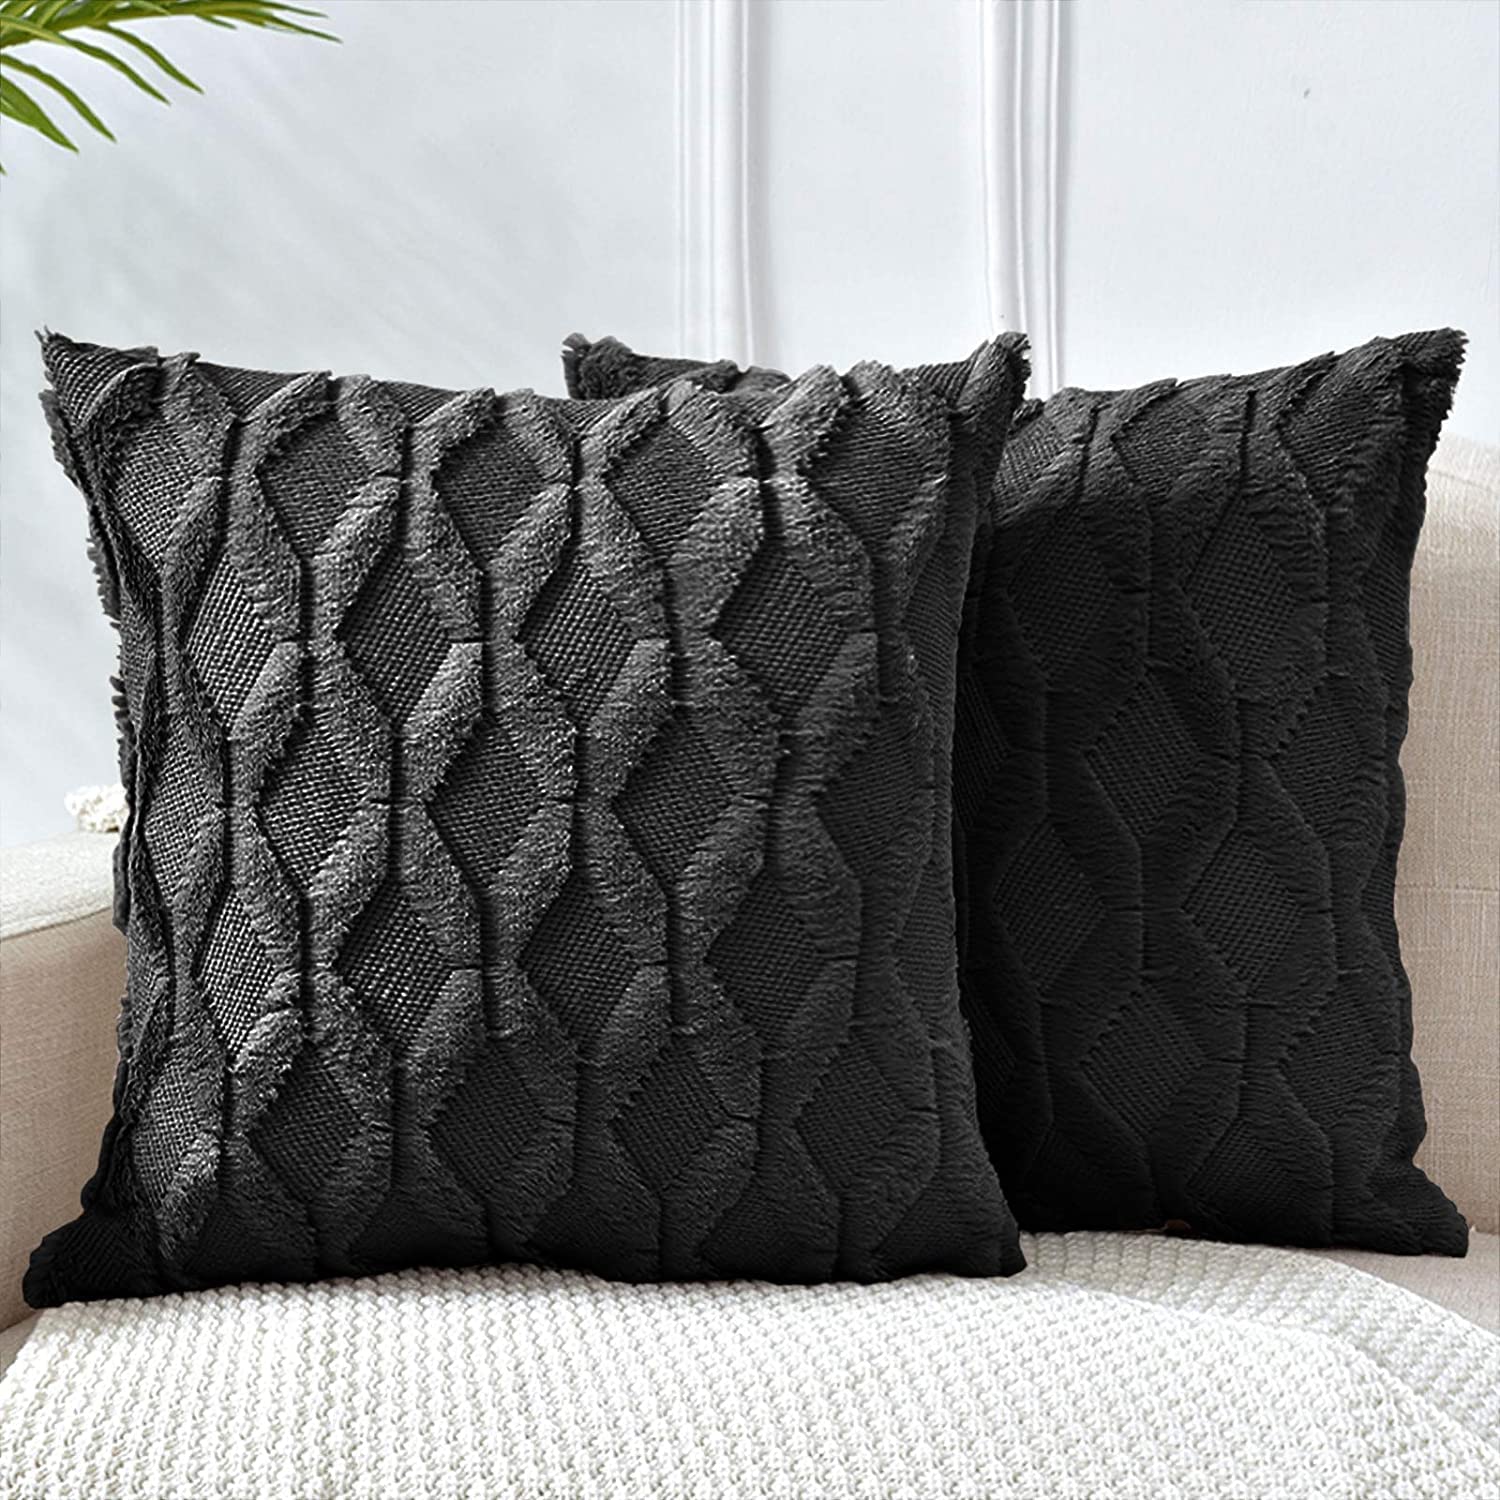 2 Pack Decorative Boho Throw Pillow Covers 45 x 45 cm – Black